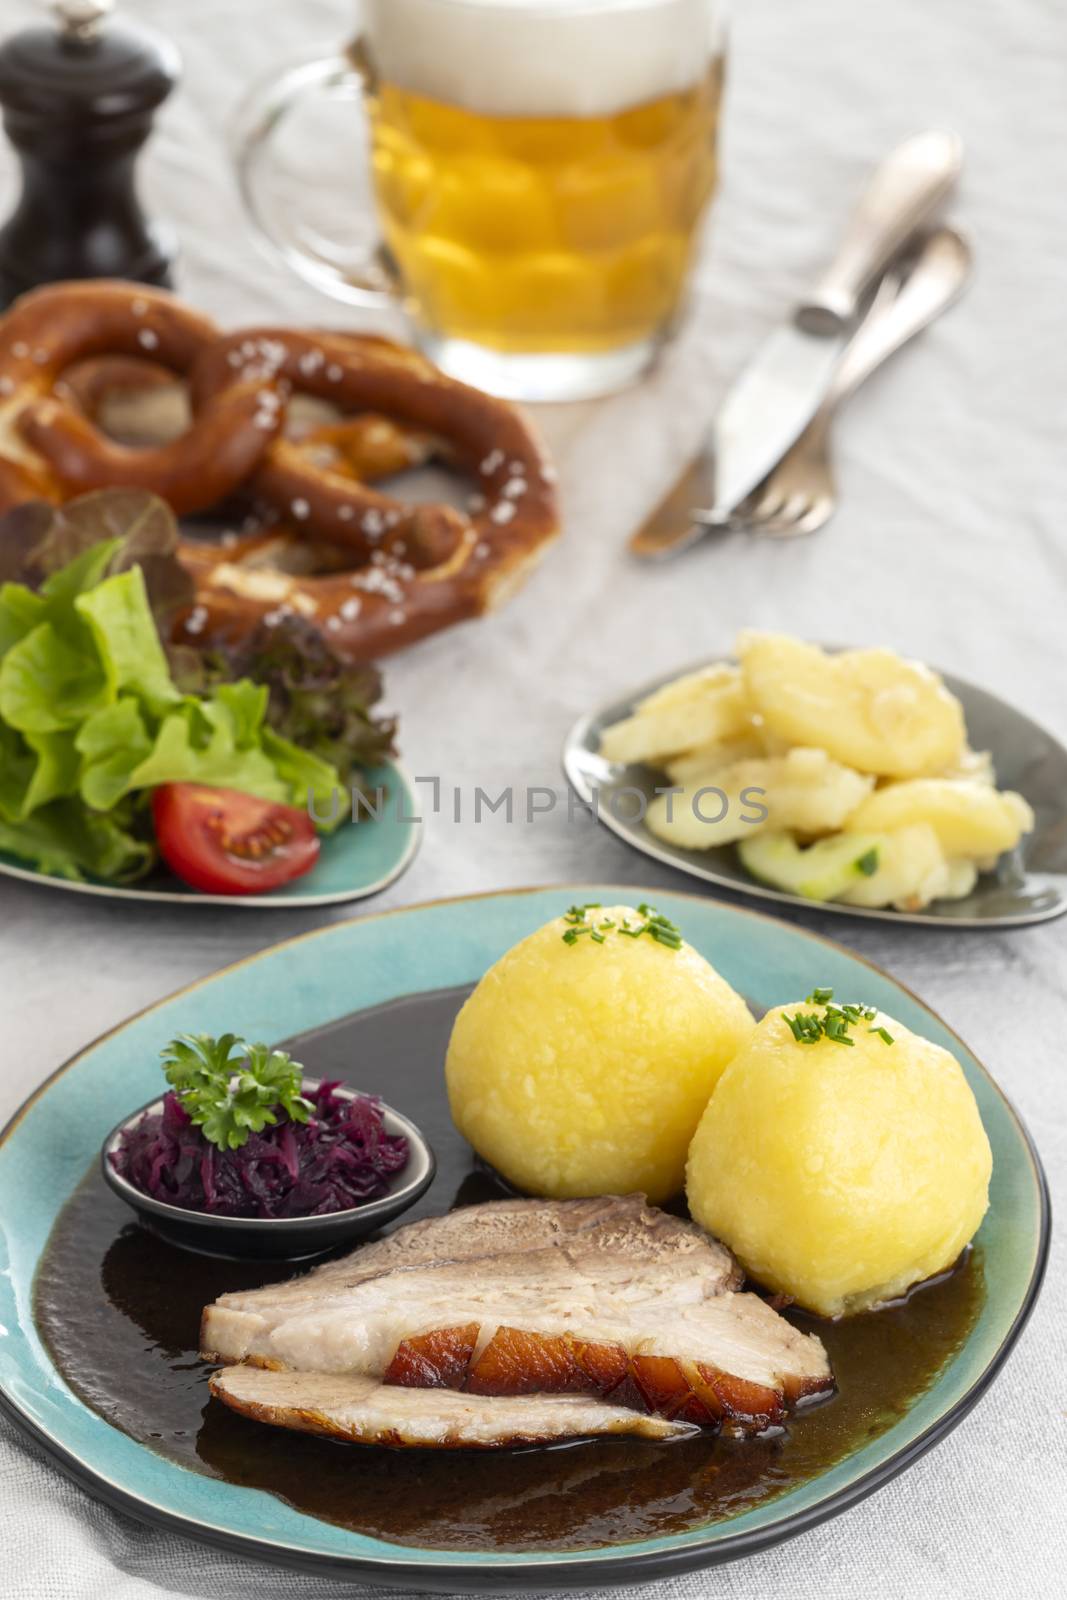 bavarian roasted pork with dumplings